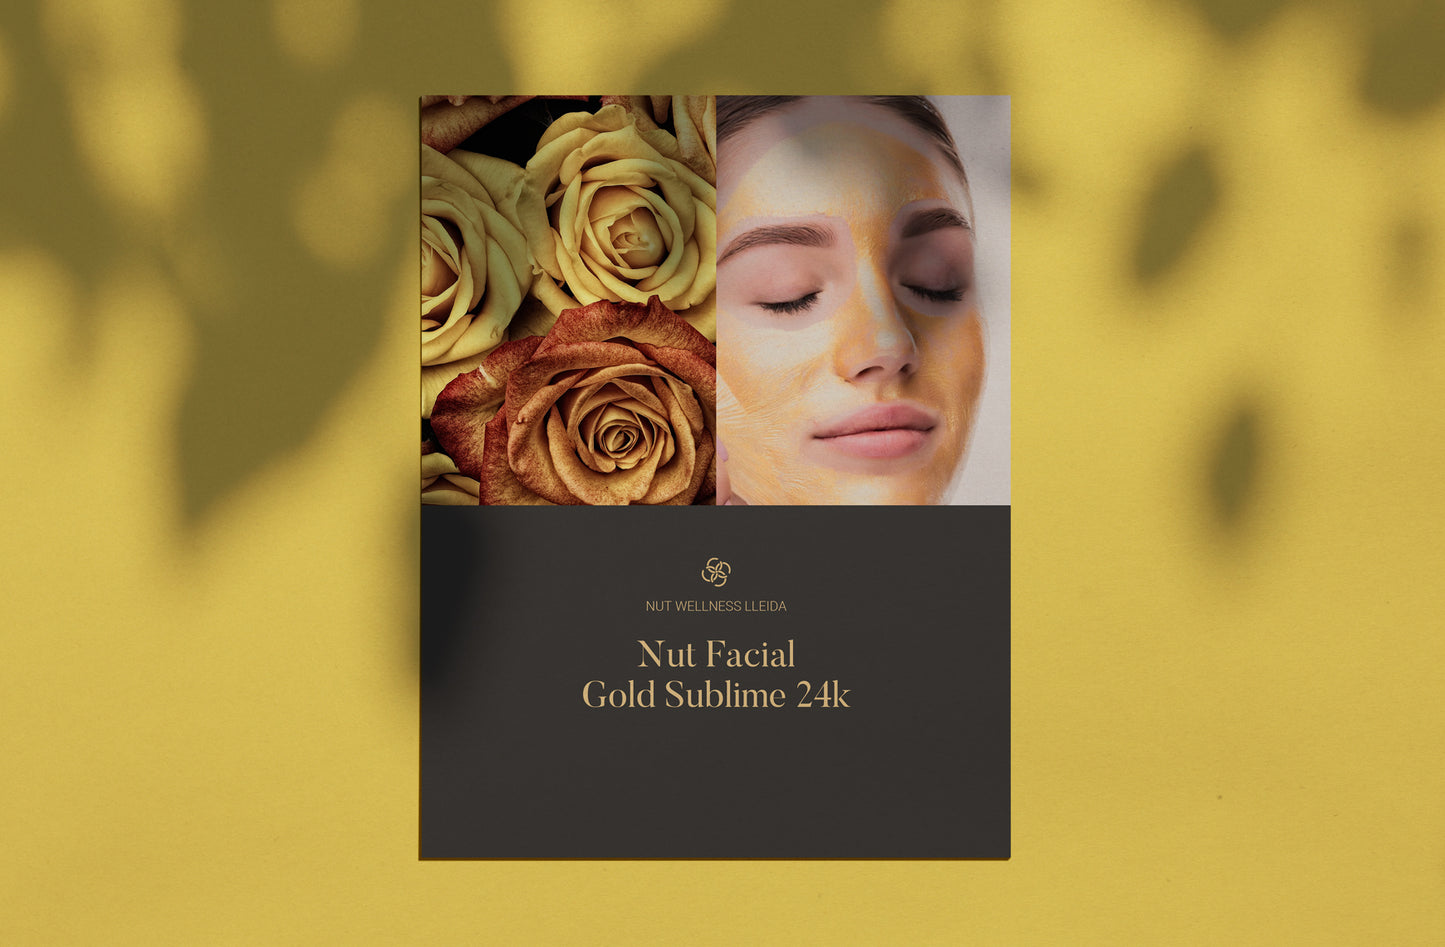 Nut Facial Gold Sublime 24k